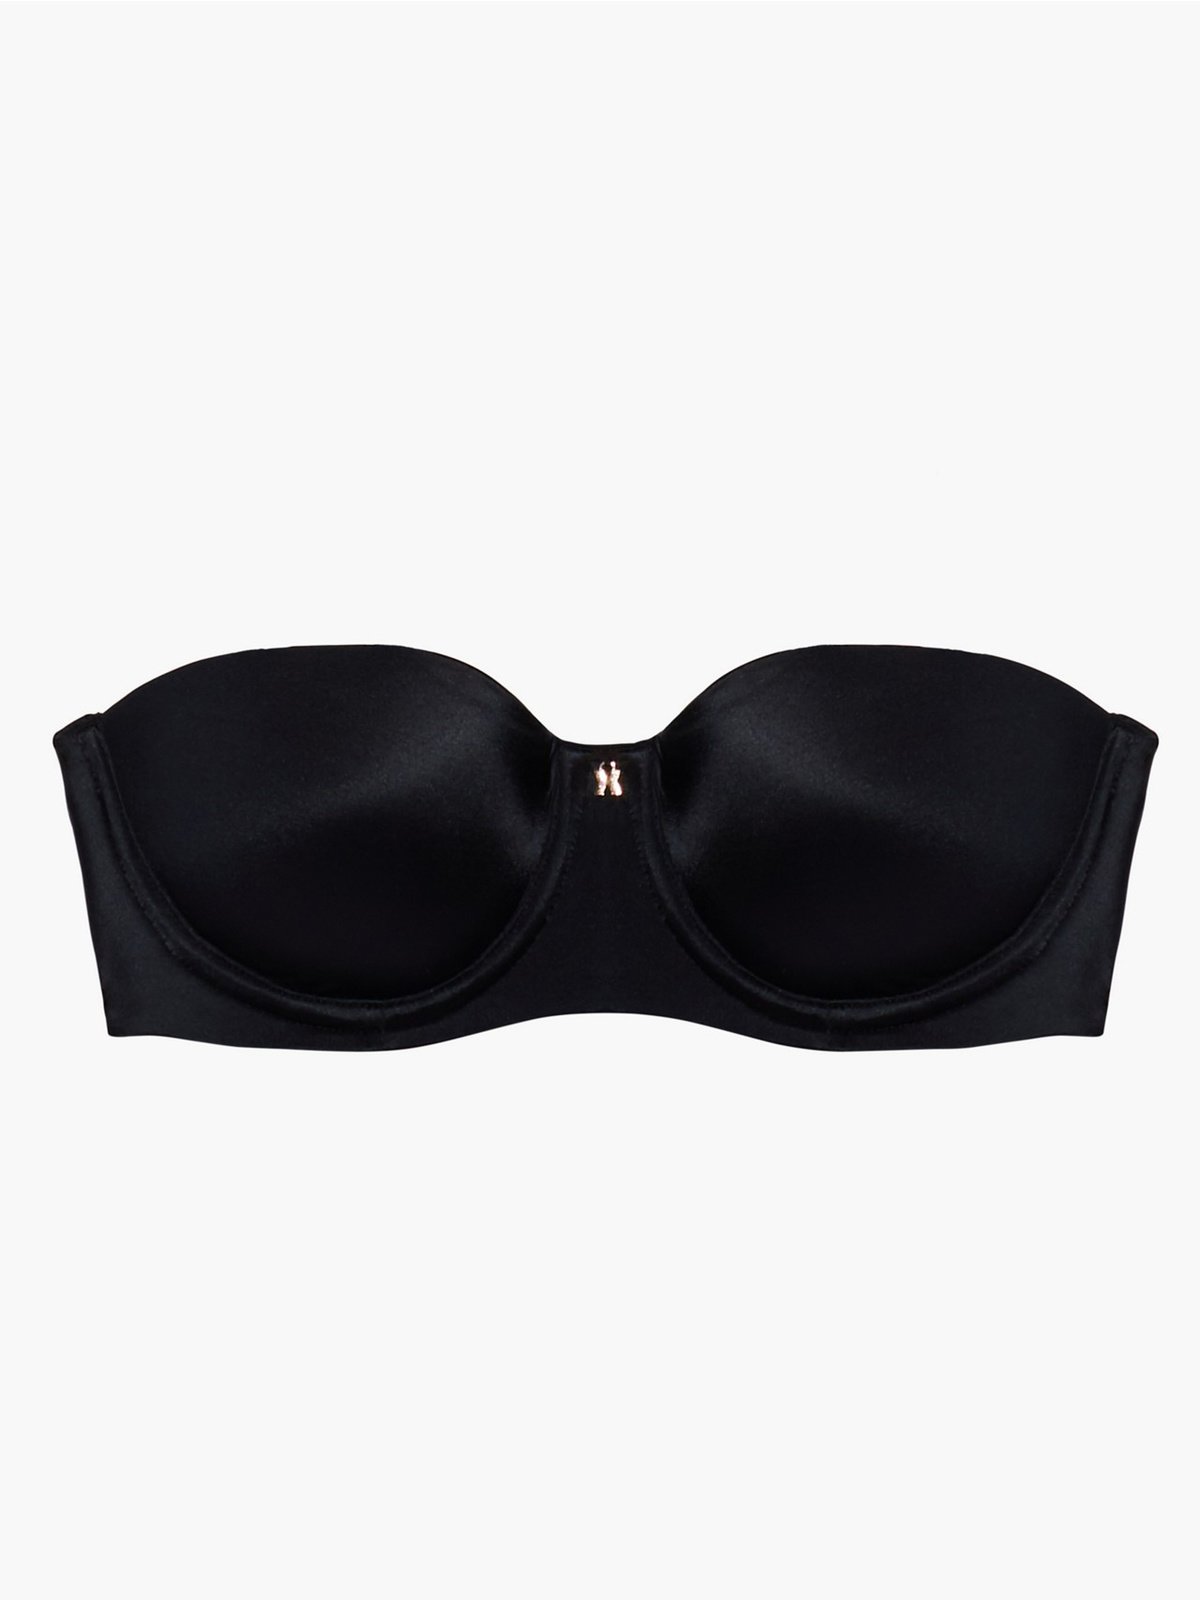 Victoria Secret strapless bra size 38 C